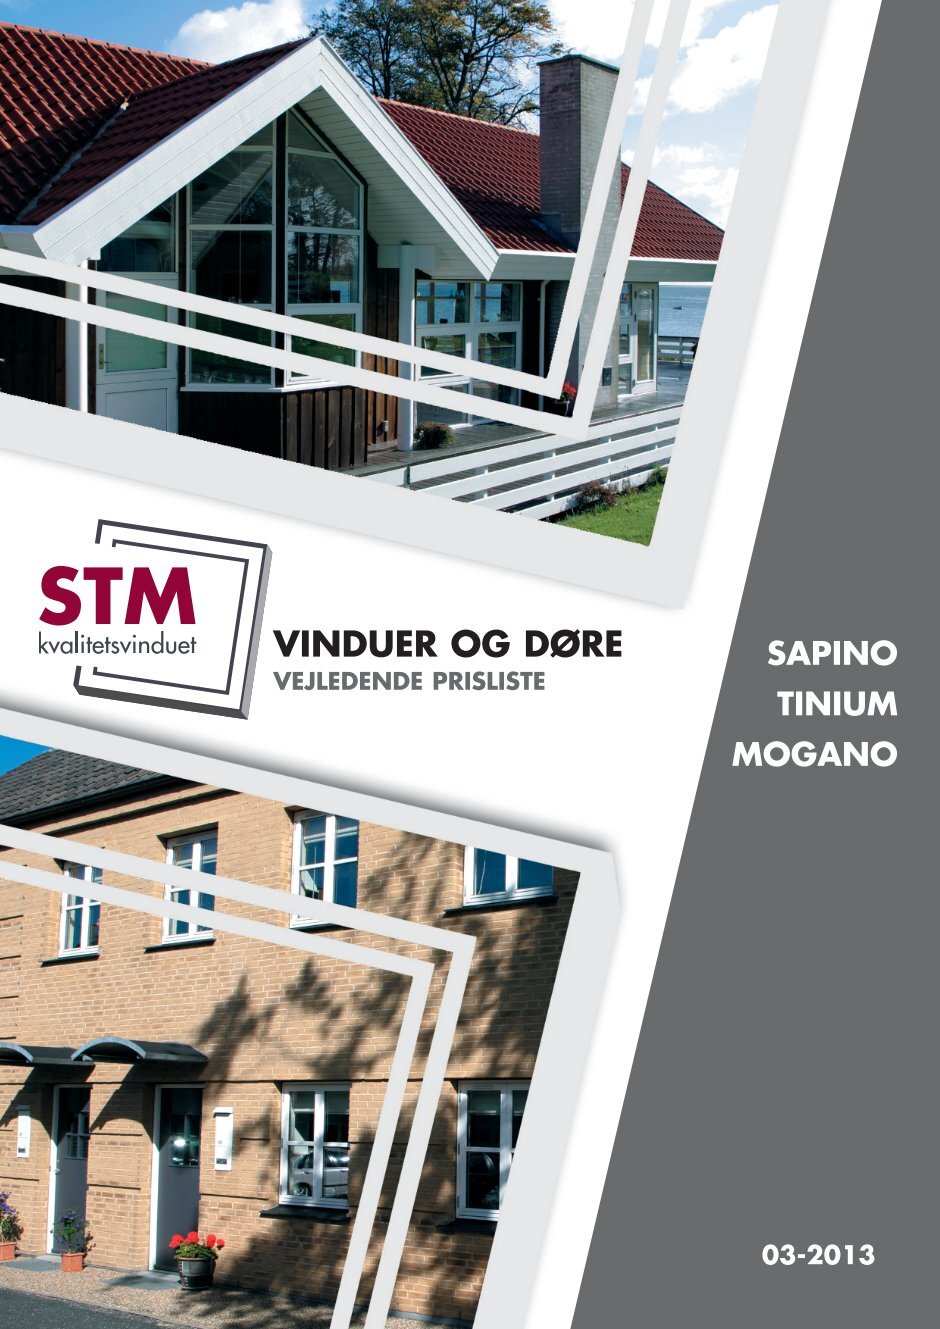 4 free Magazines from STMVINDUER.DK